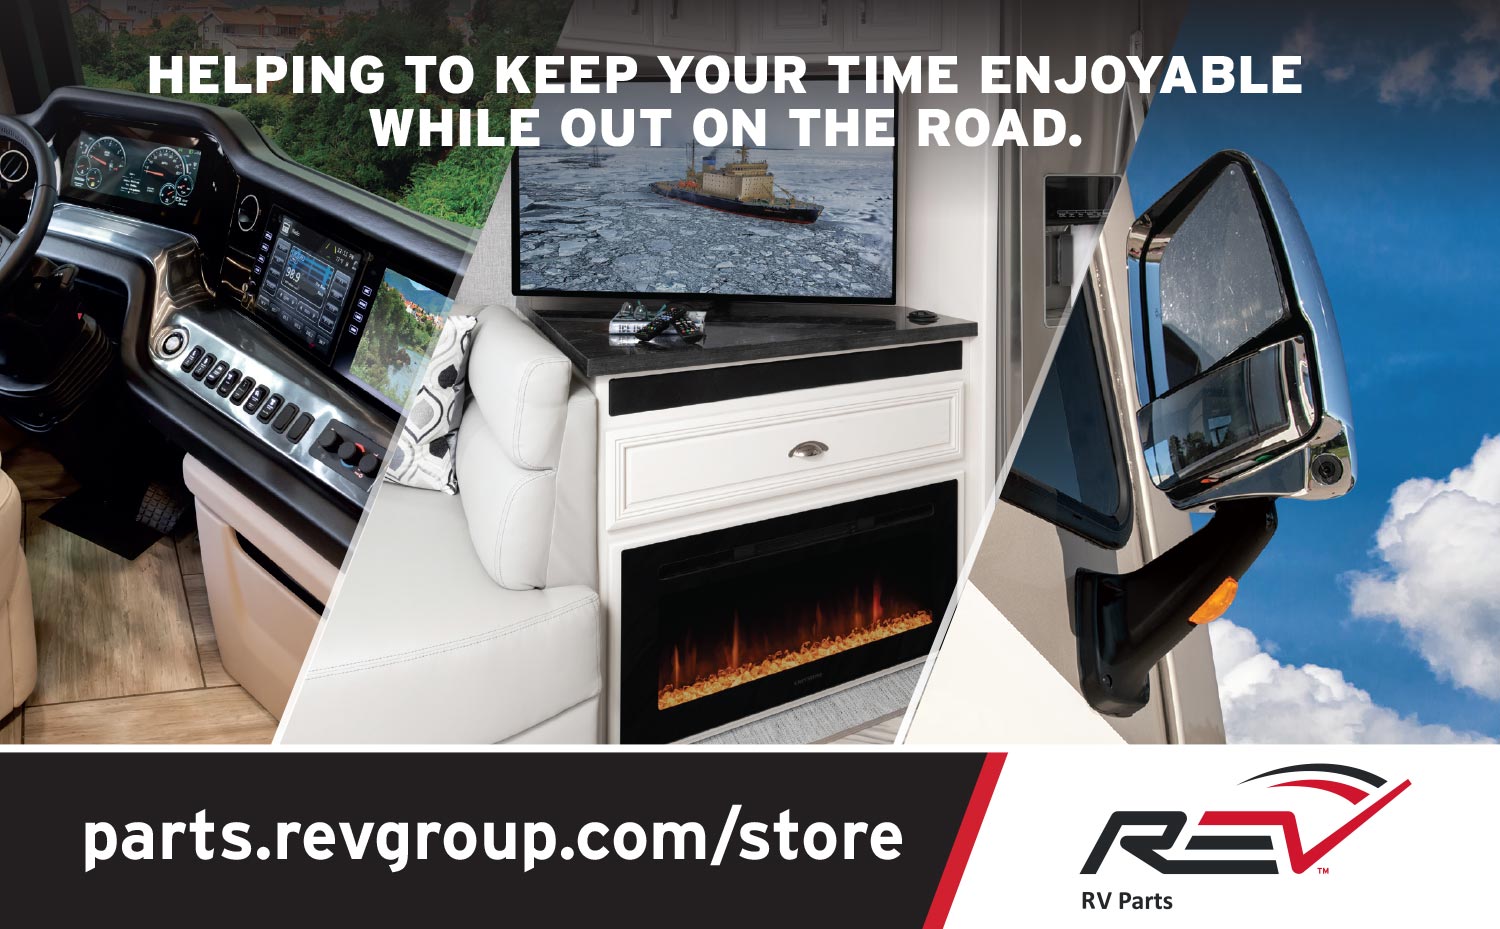 REV Group RV Parts Advertisement